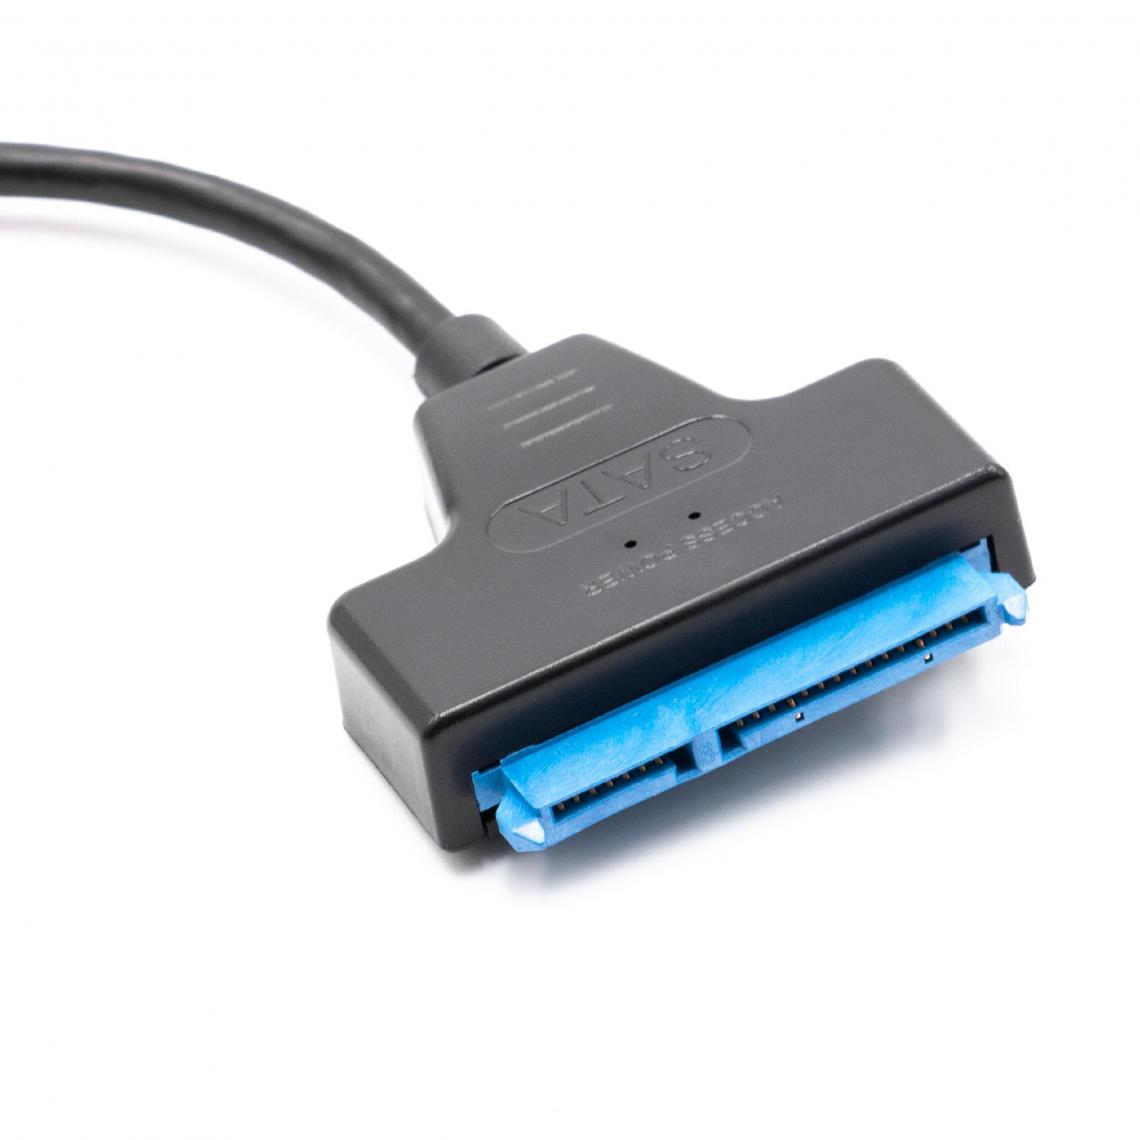 Vhbw - vhbw SATA III vers USB 3.0 Câble de raccordement pour disque dur 2'5" HDD, SSD Plug & Play bleu / noir - Accessoires alimentation